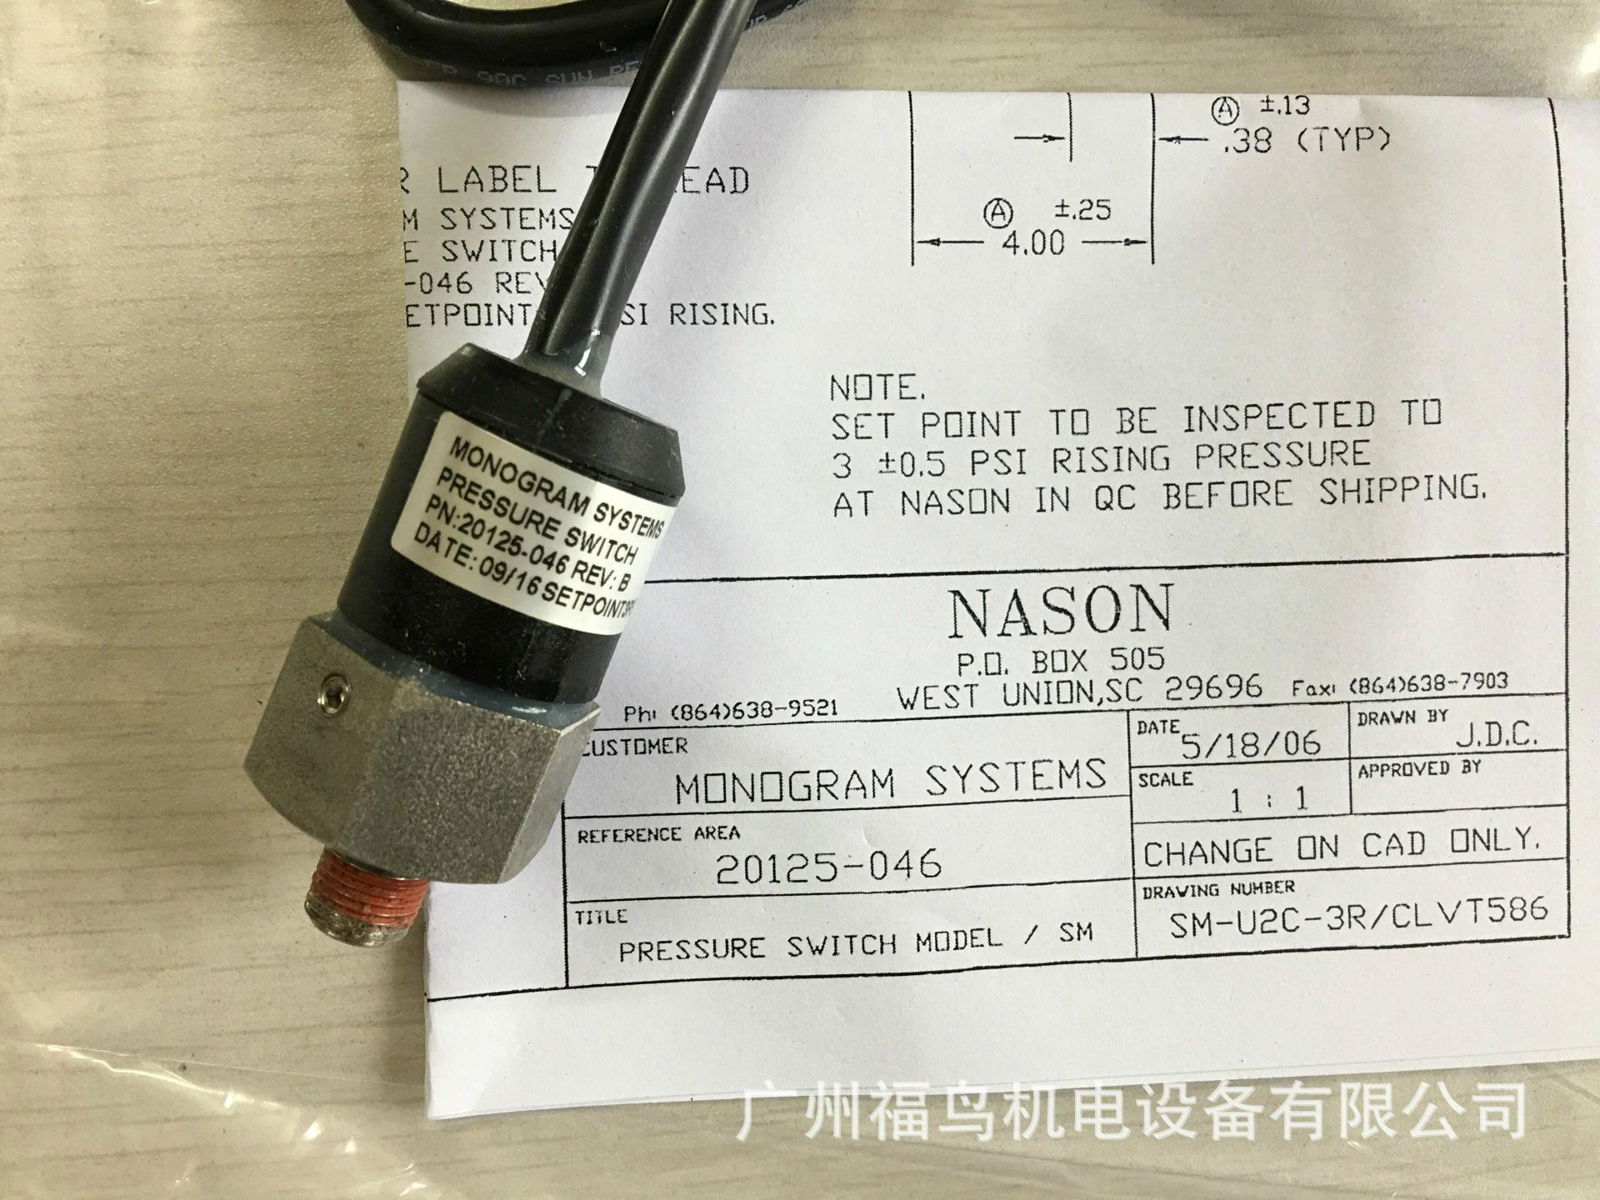 NASON(MONOGRAM SYSTEMS)压力开关, 型号: 20125-046